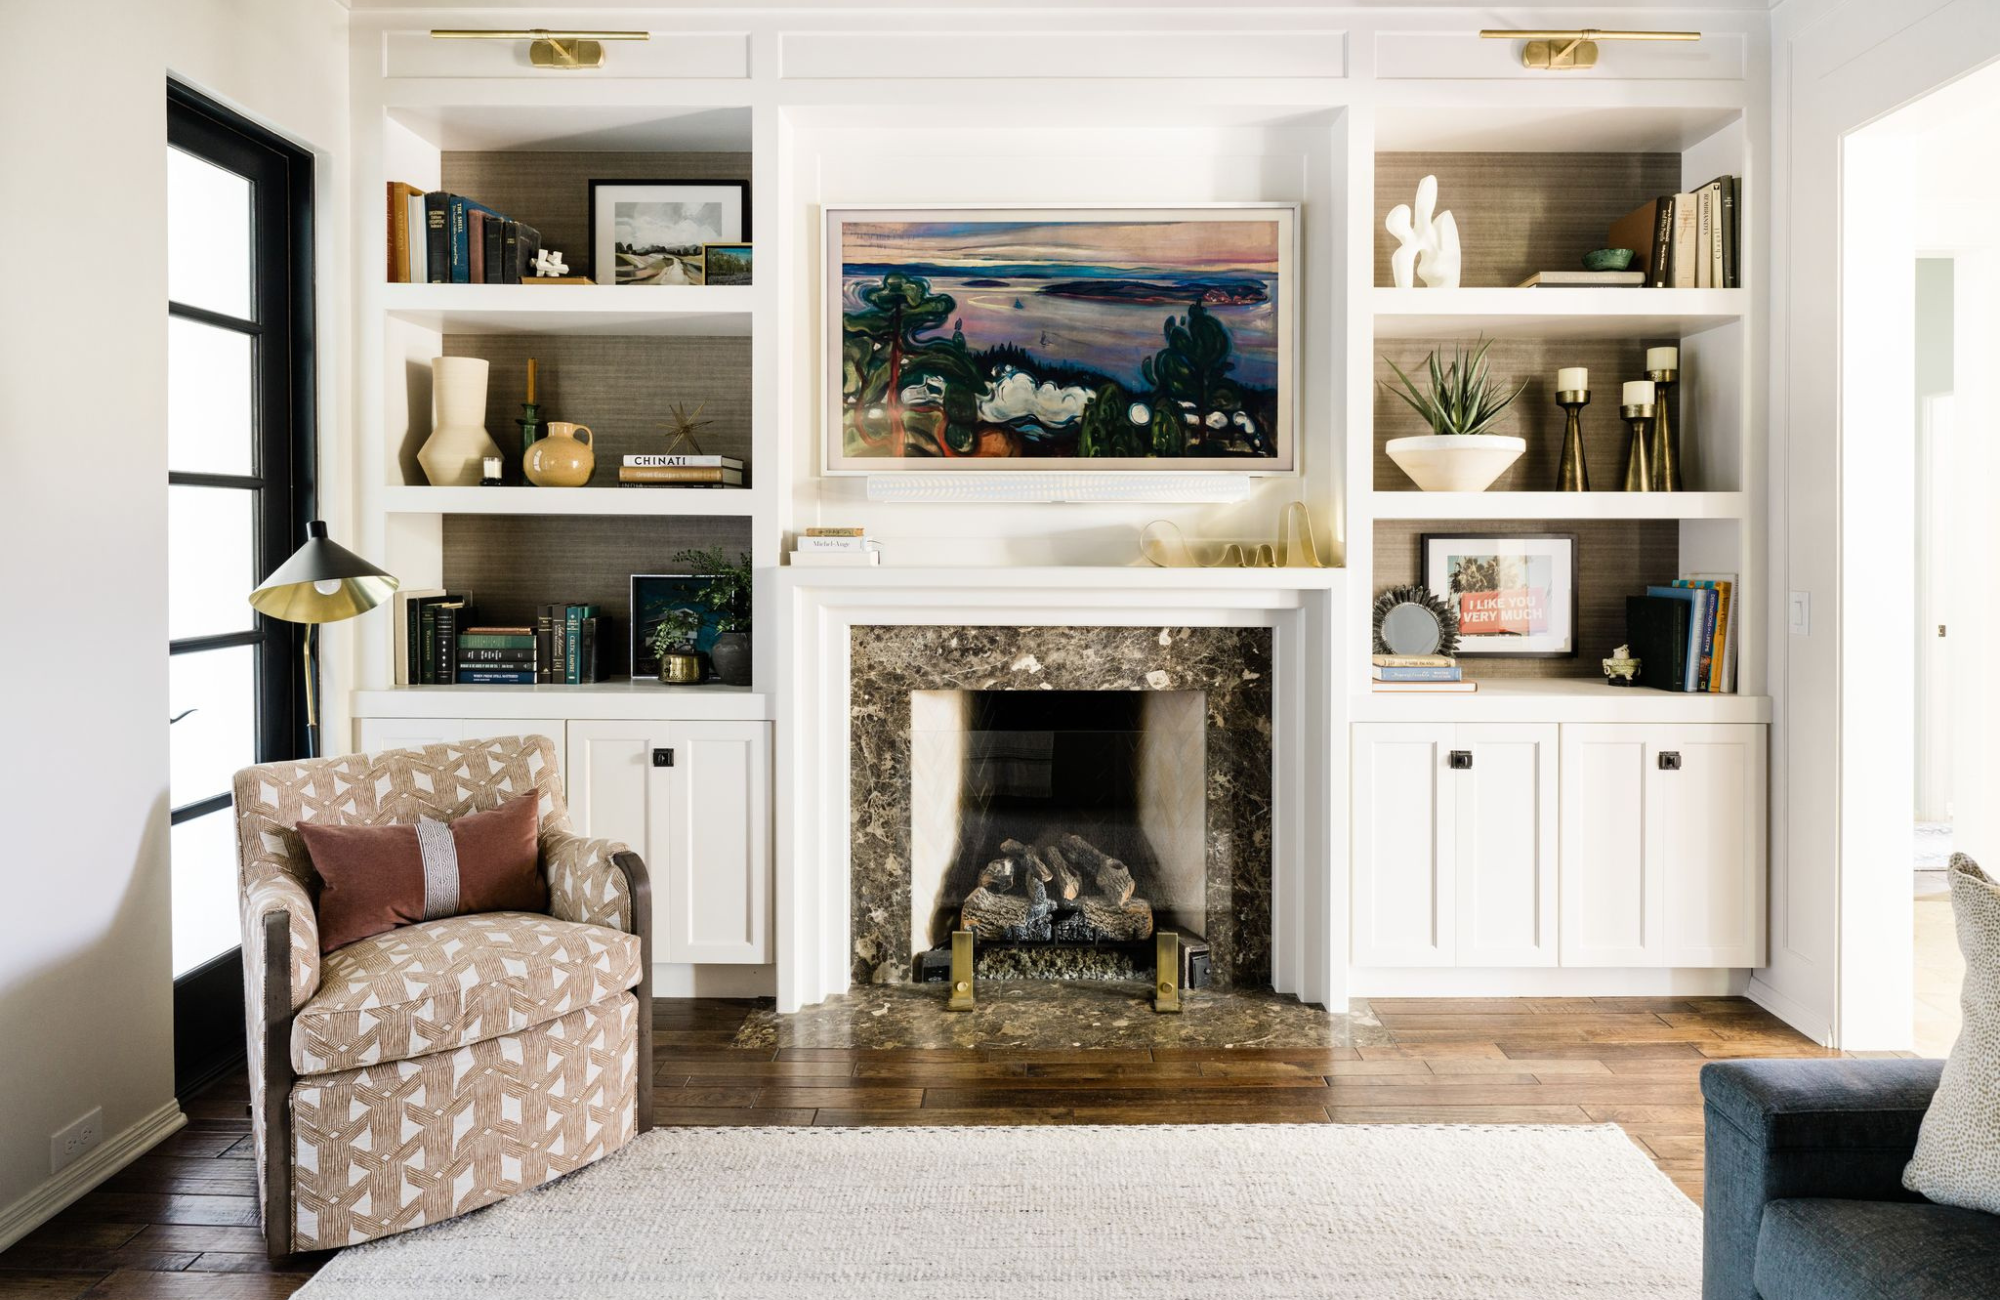 morningside tx living room design styleberry creative interiors stone fireplace white built-in upholstered chair